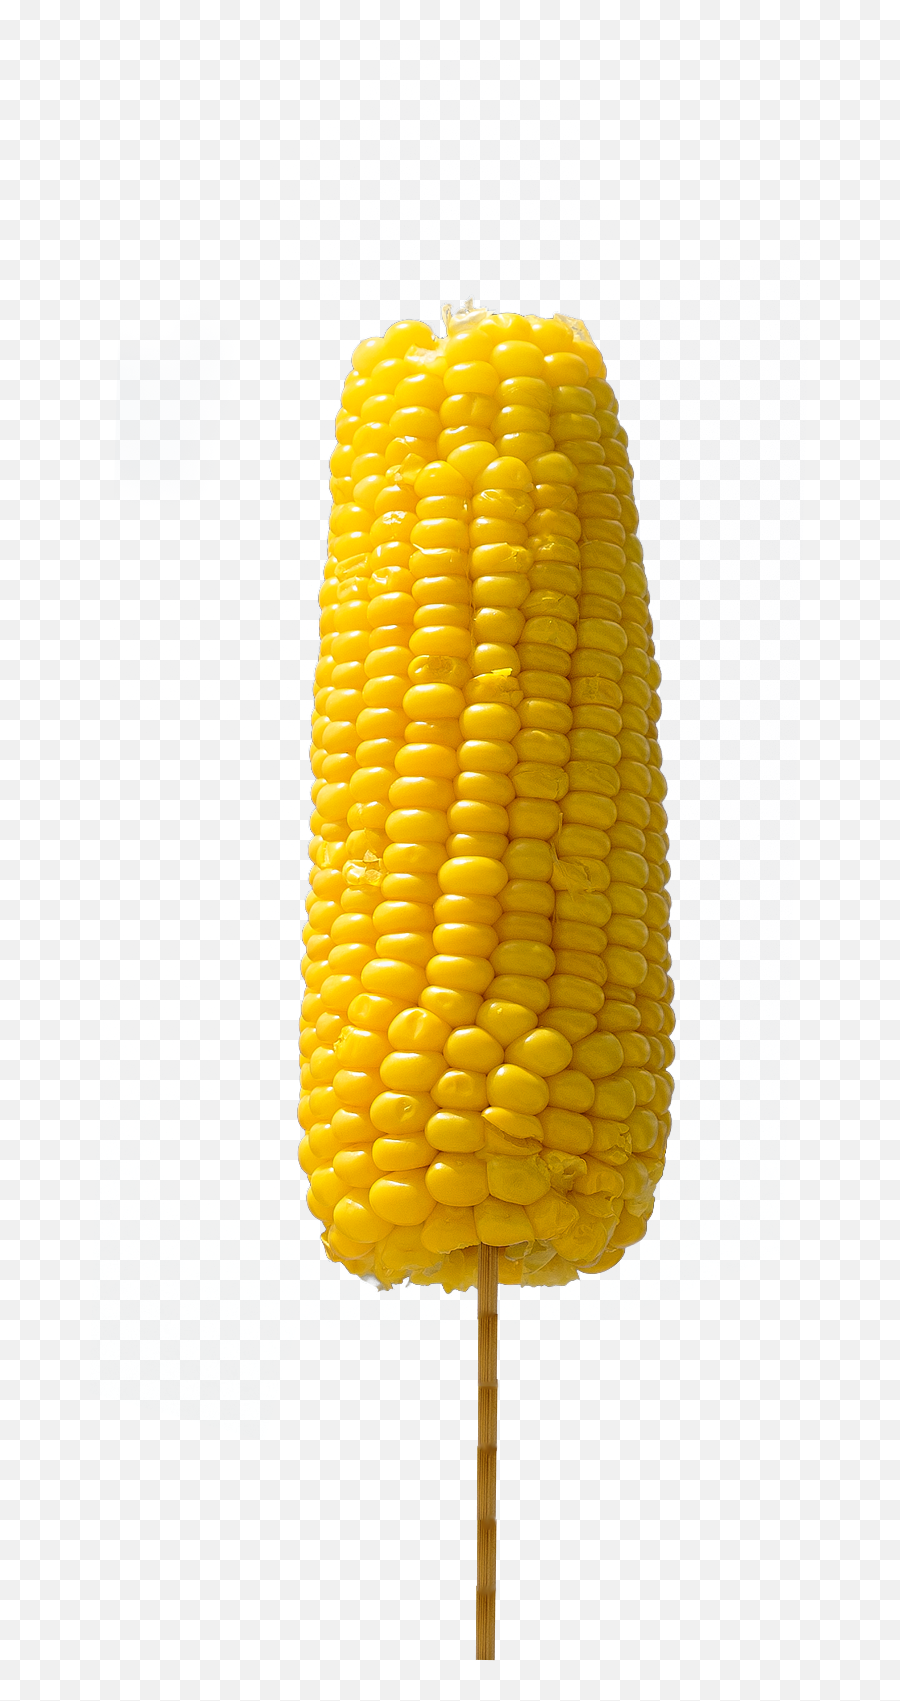 Corn Png Image For Free Download - Corn Kernels,Corn Png